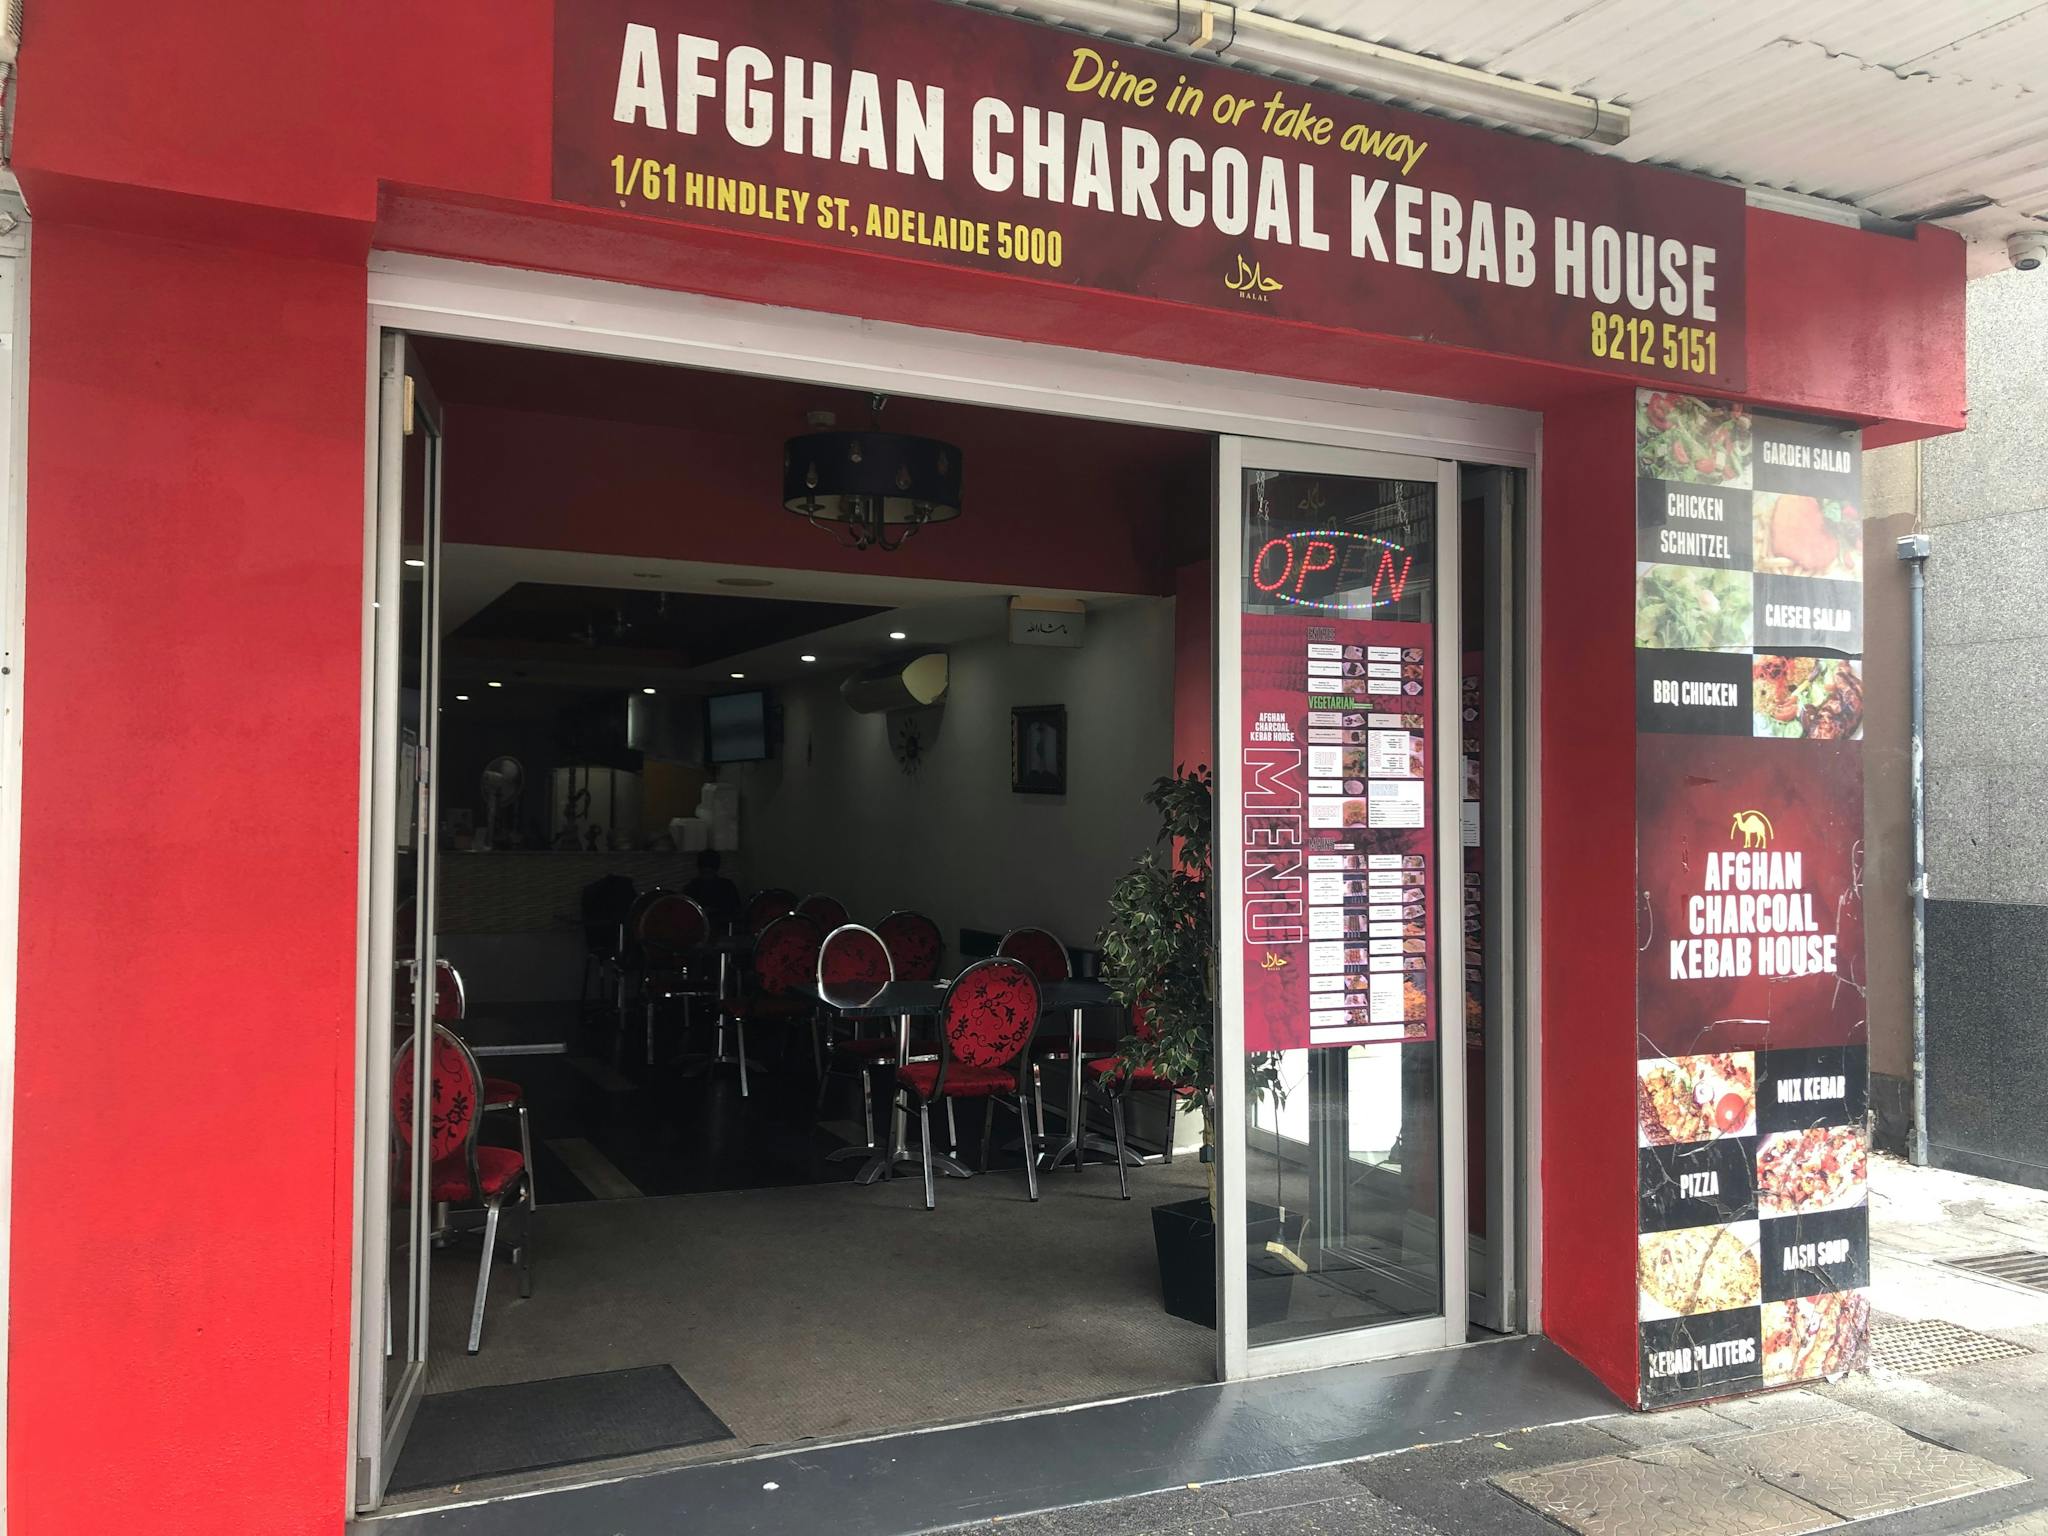 Afghan charcoal kebab house Slider Image 1